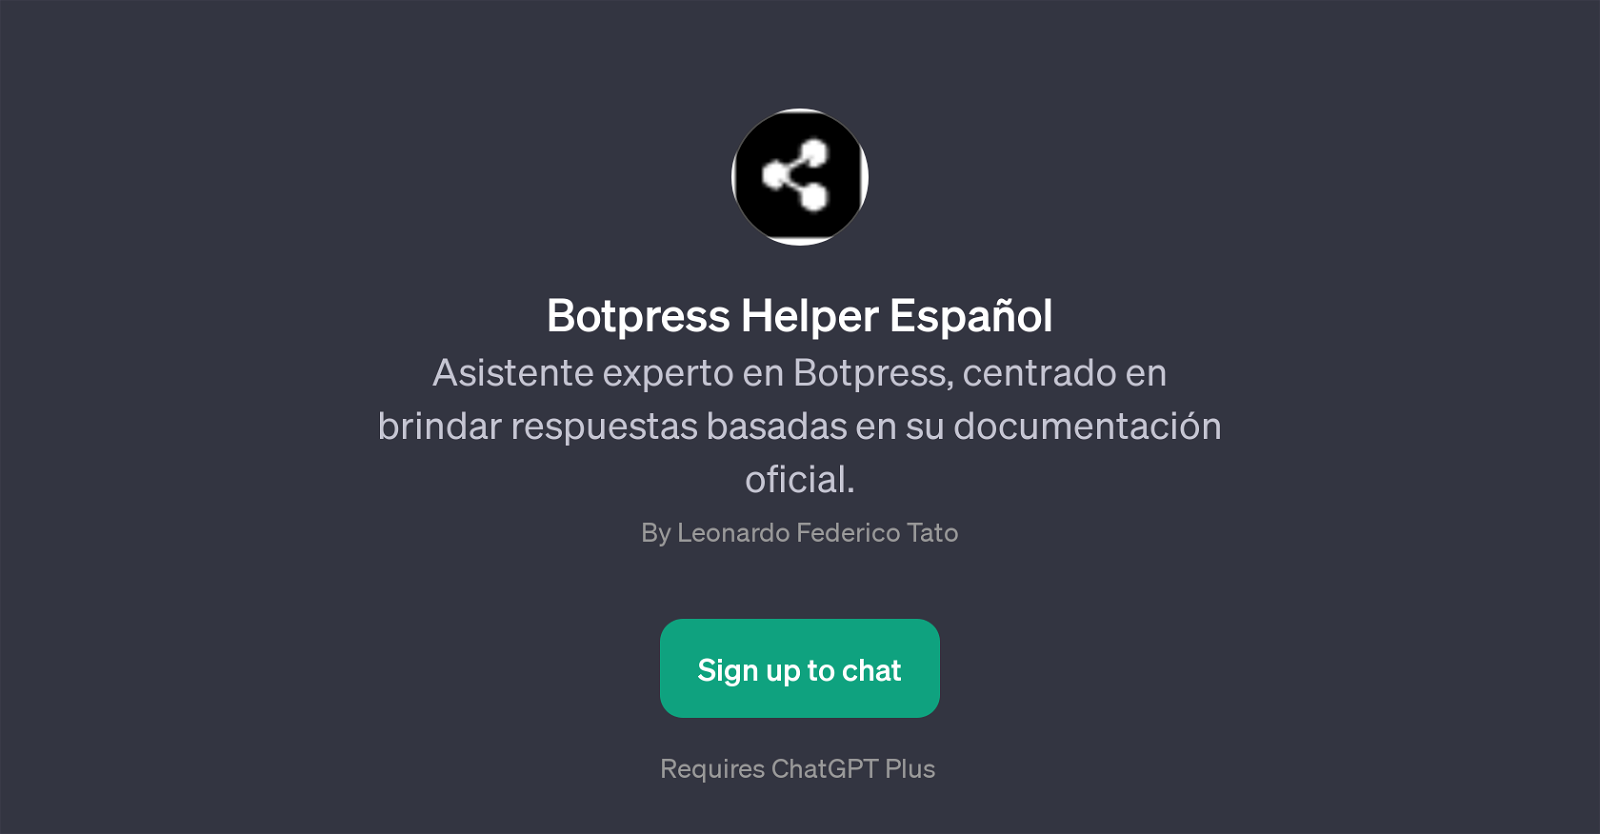 Botpress Helper Espaol website